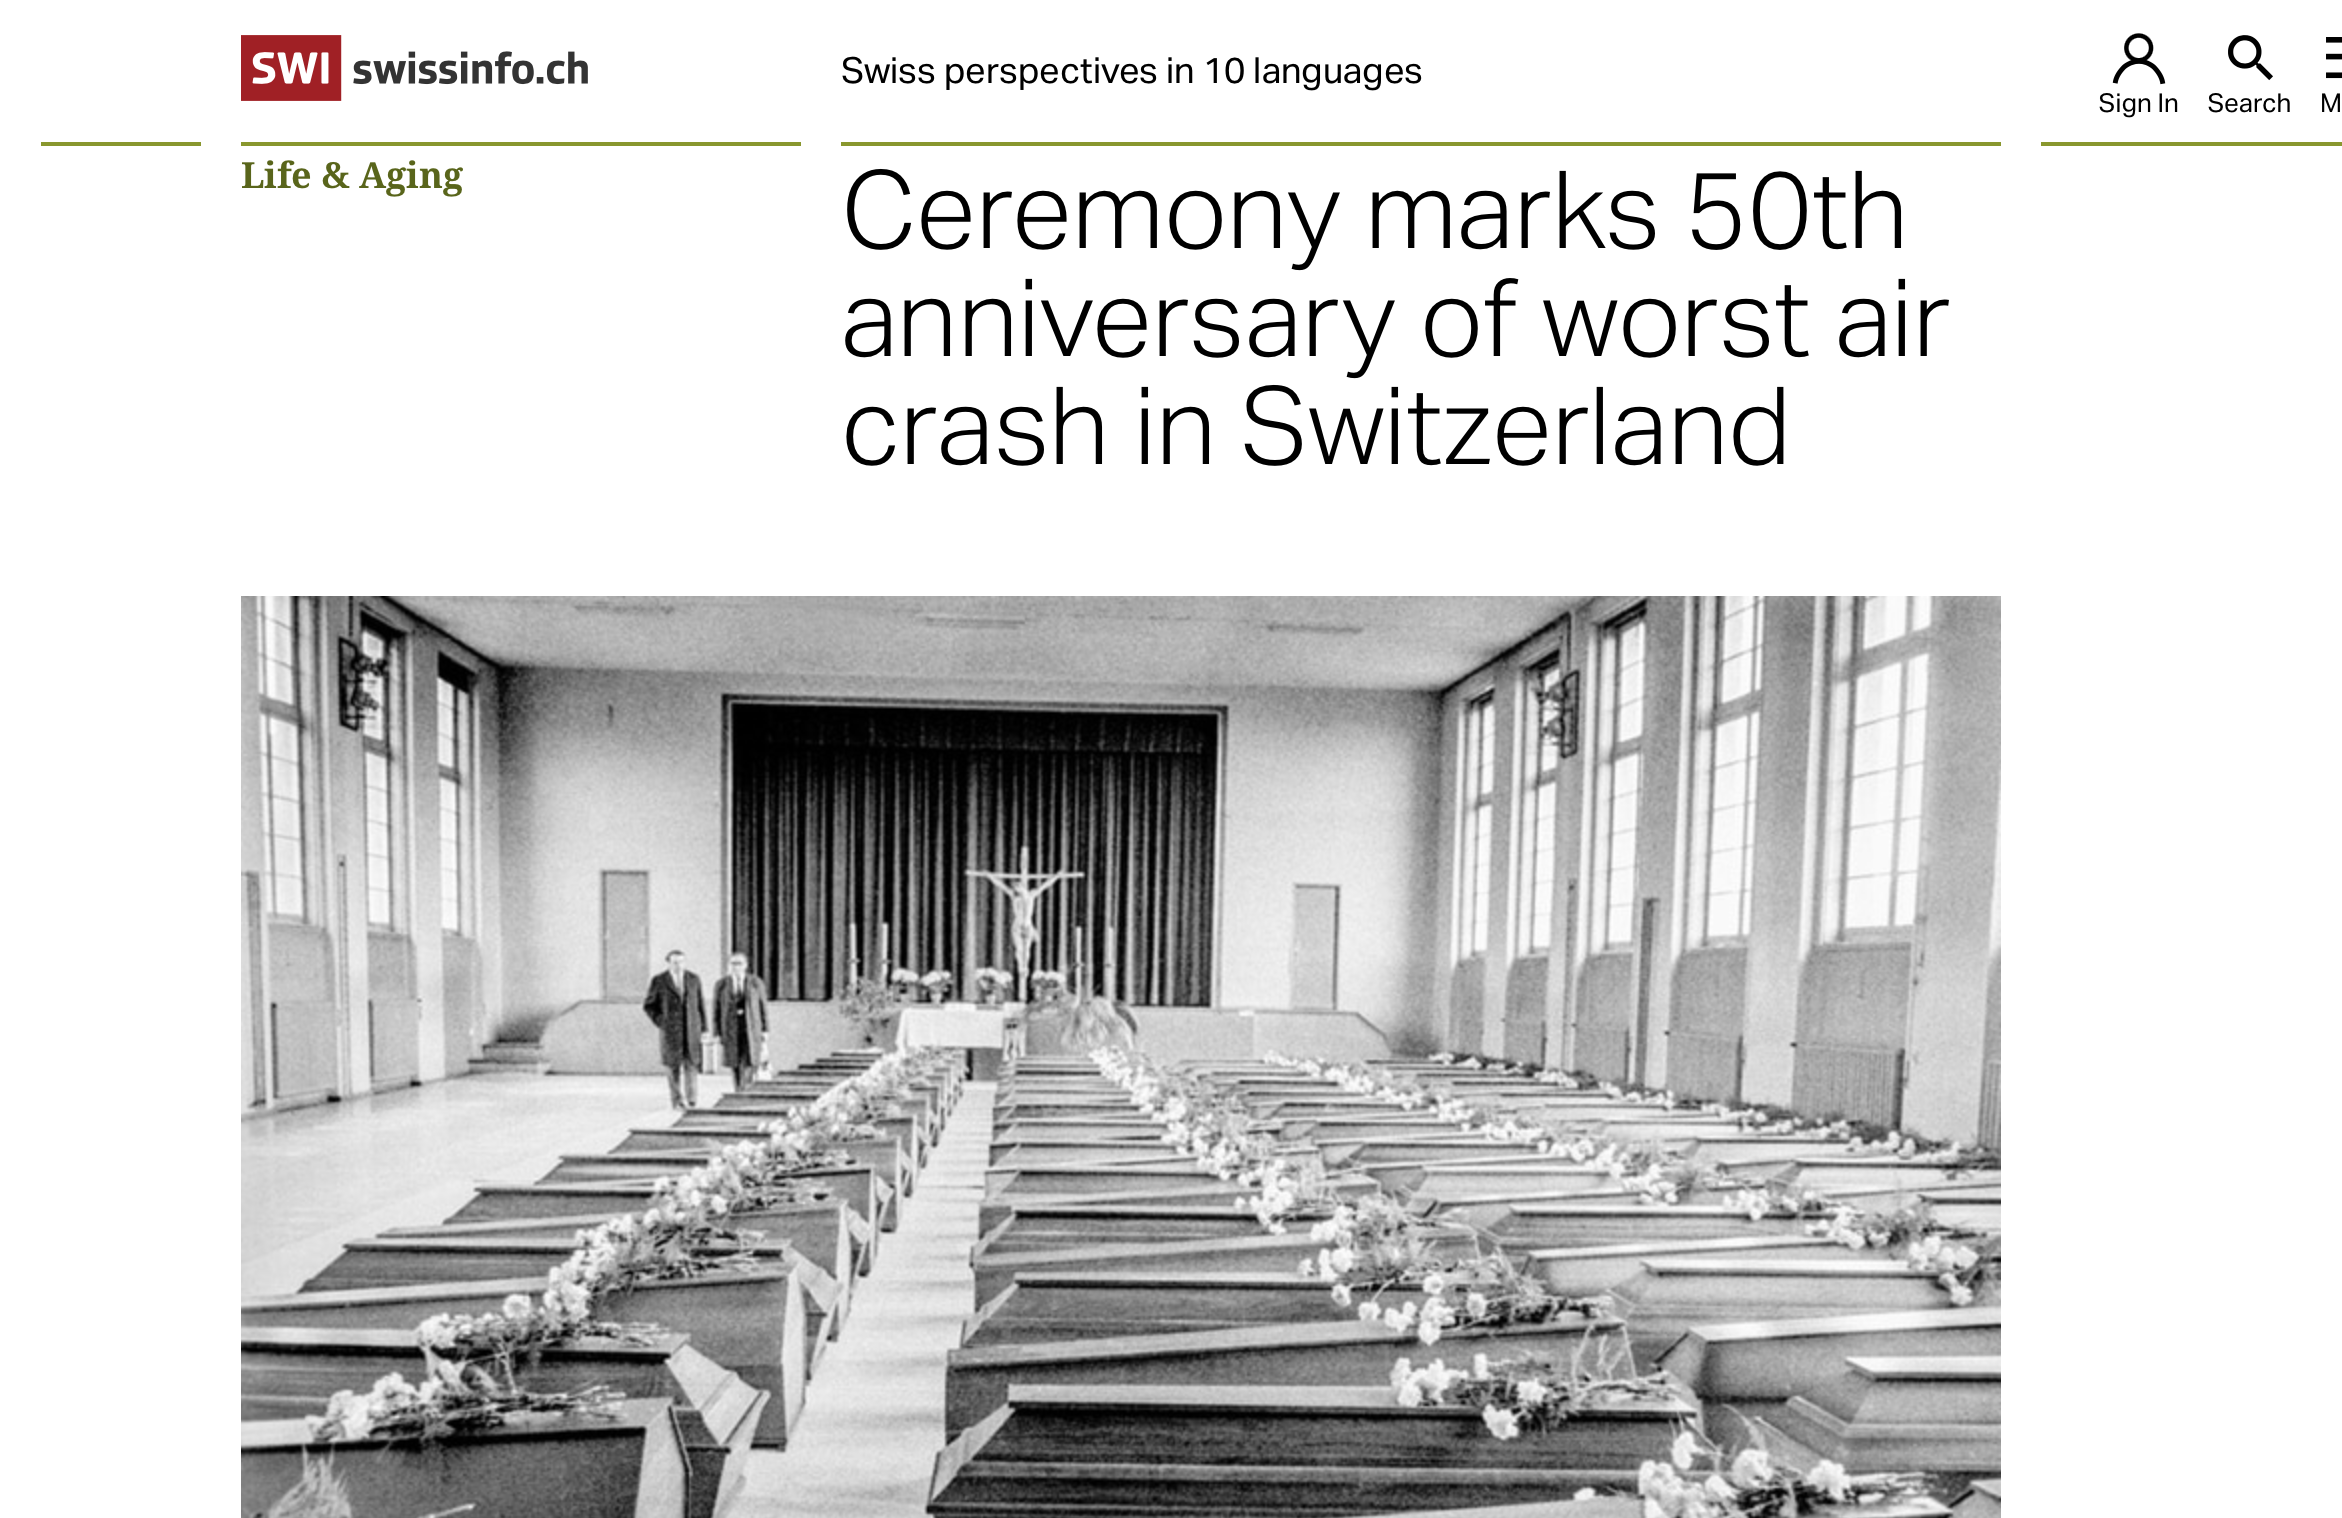 Ceremony marks 50th anniversary of worst air crash in Switzerland